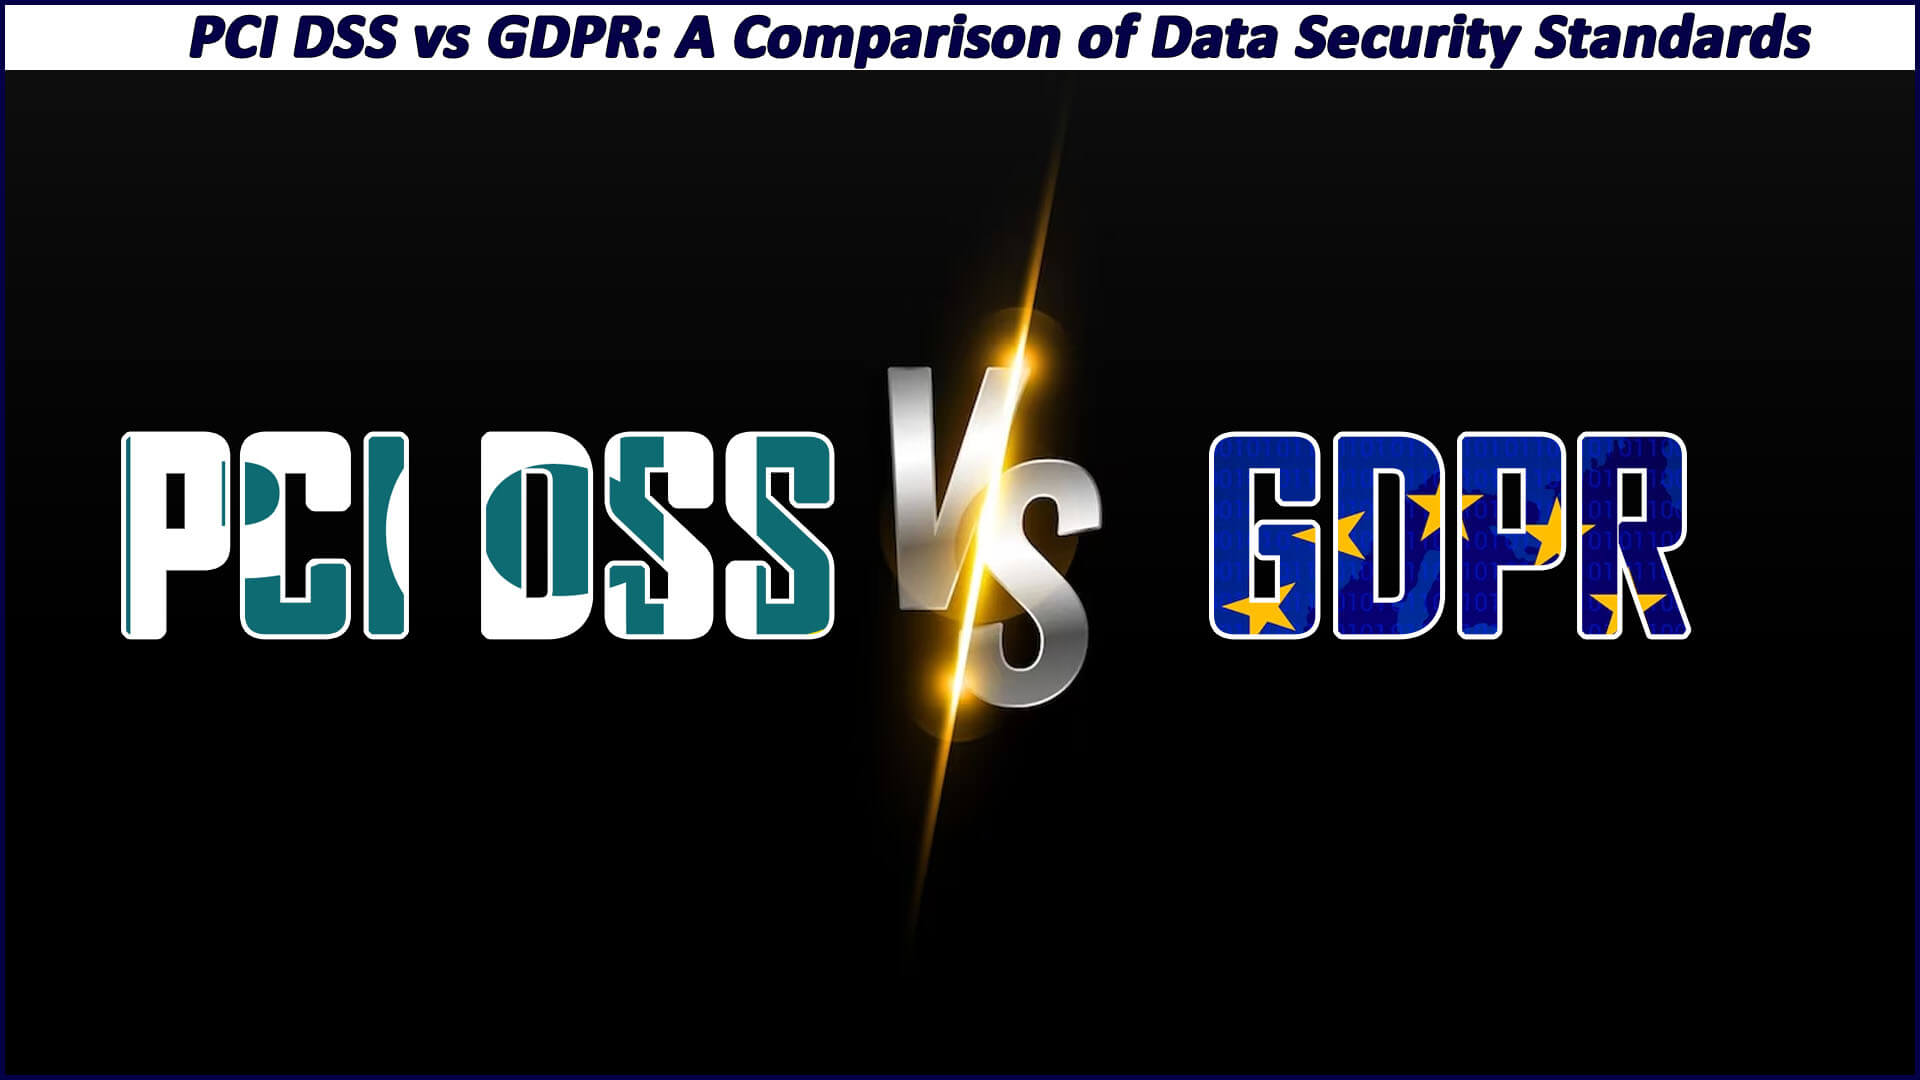 PCI DSS vs GDPR: A Comparison of Data Security Standards